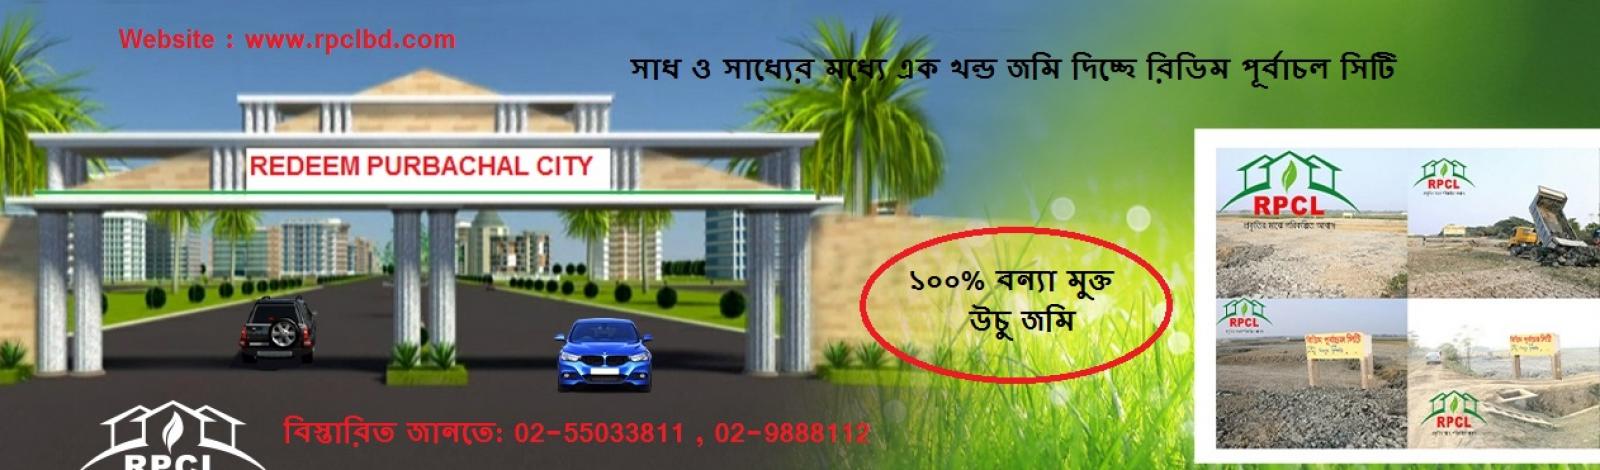 Redeem Purbachal City Ltd banner